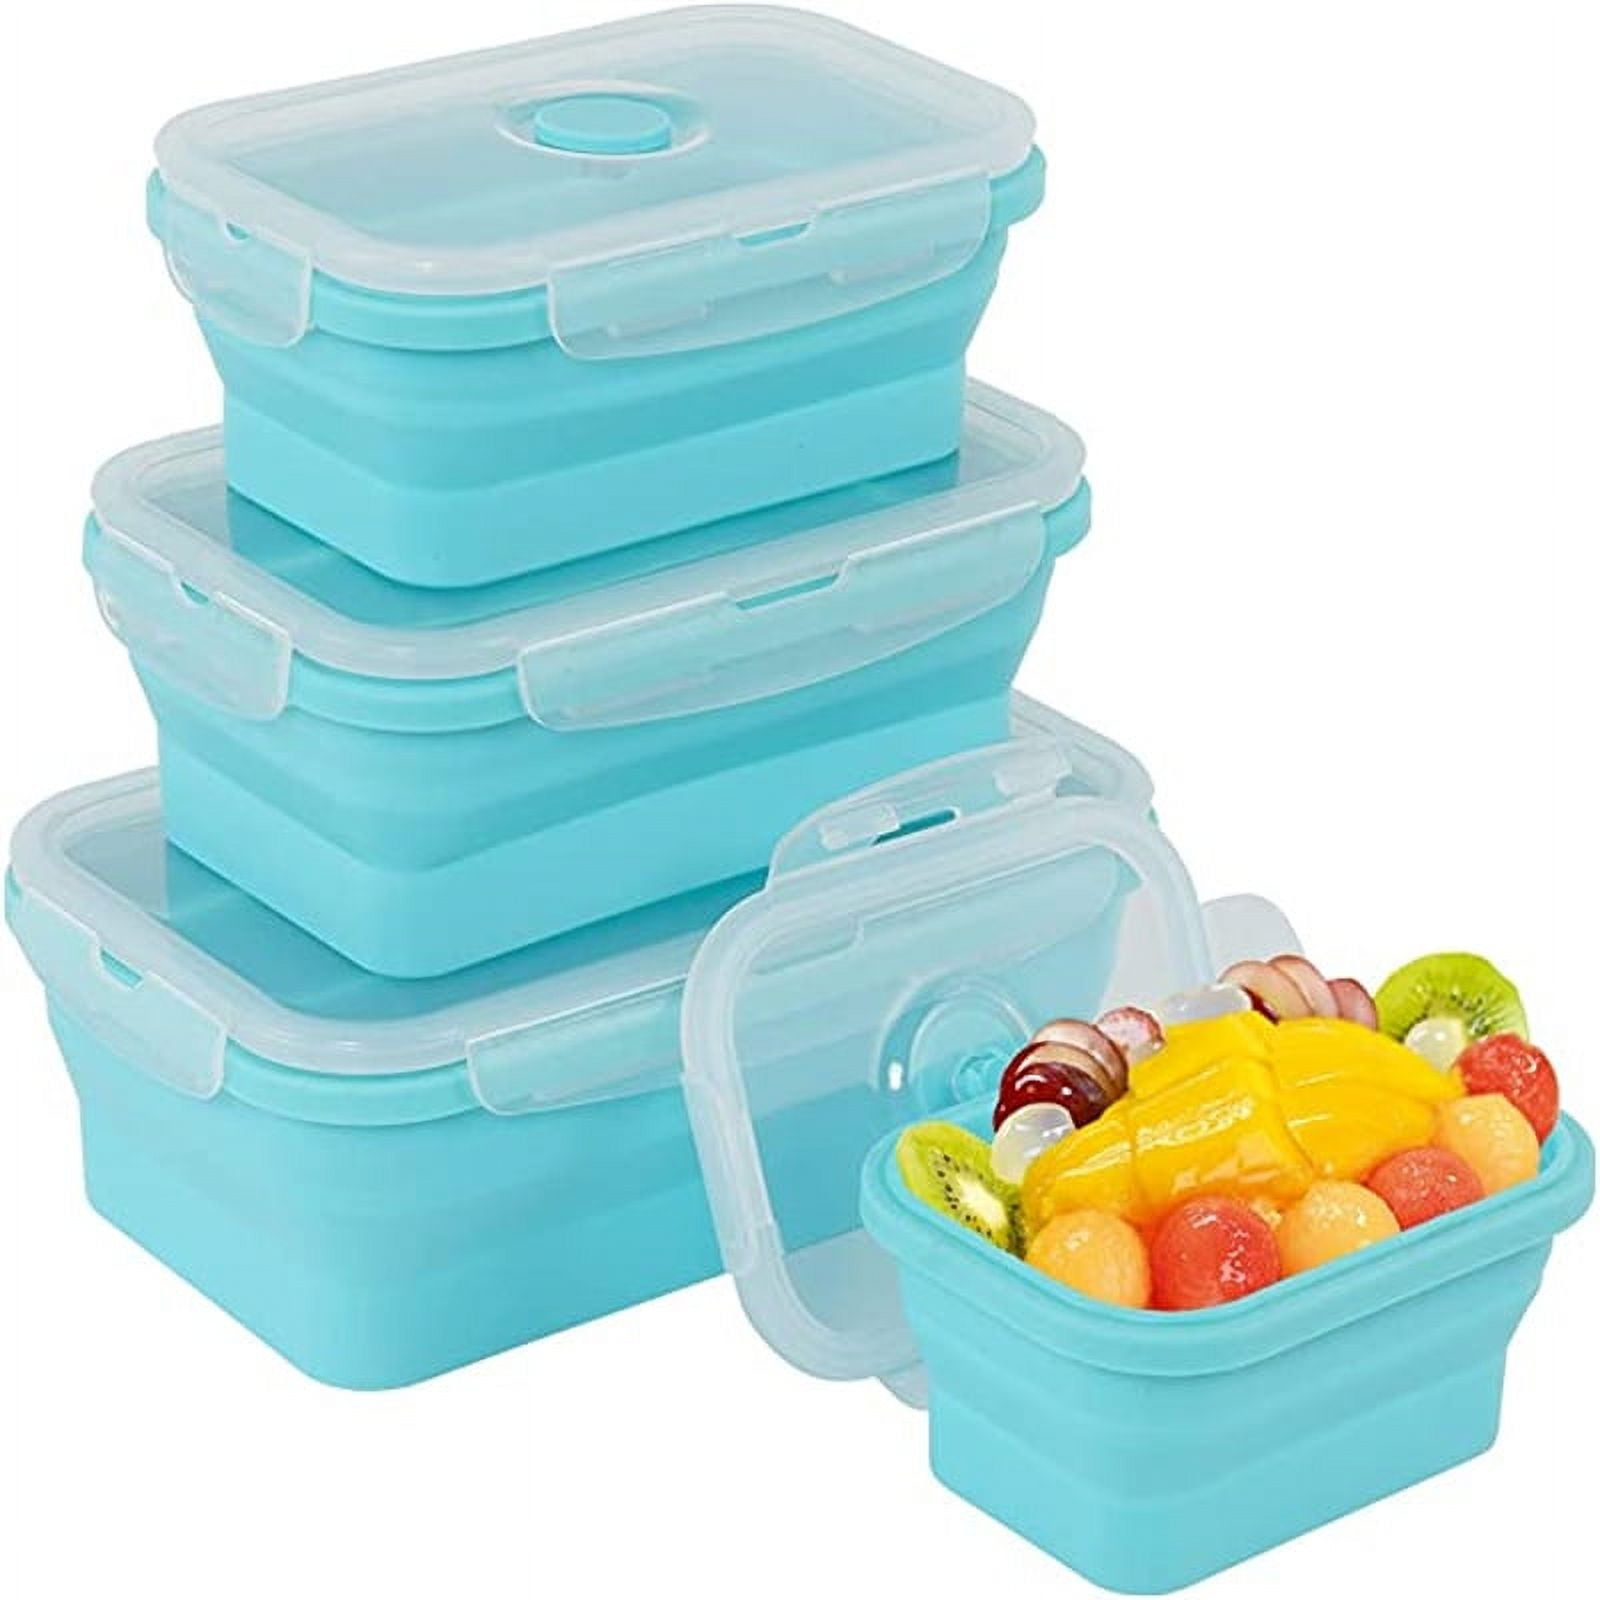 Nummyware Plastic-Free Food Storage